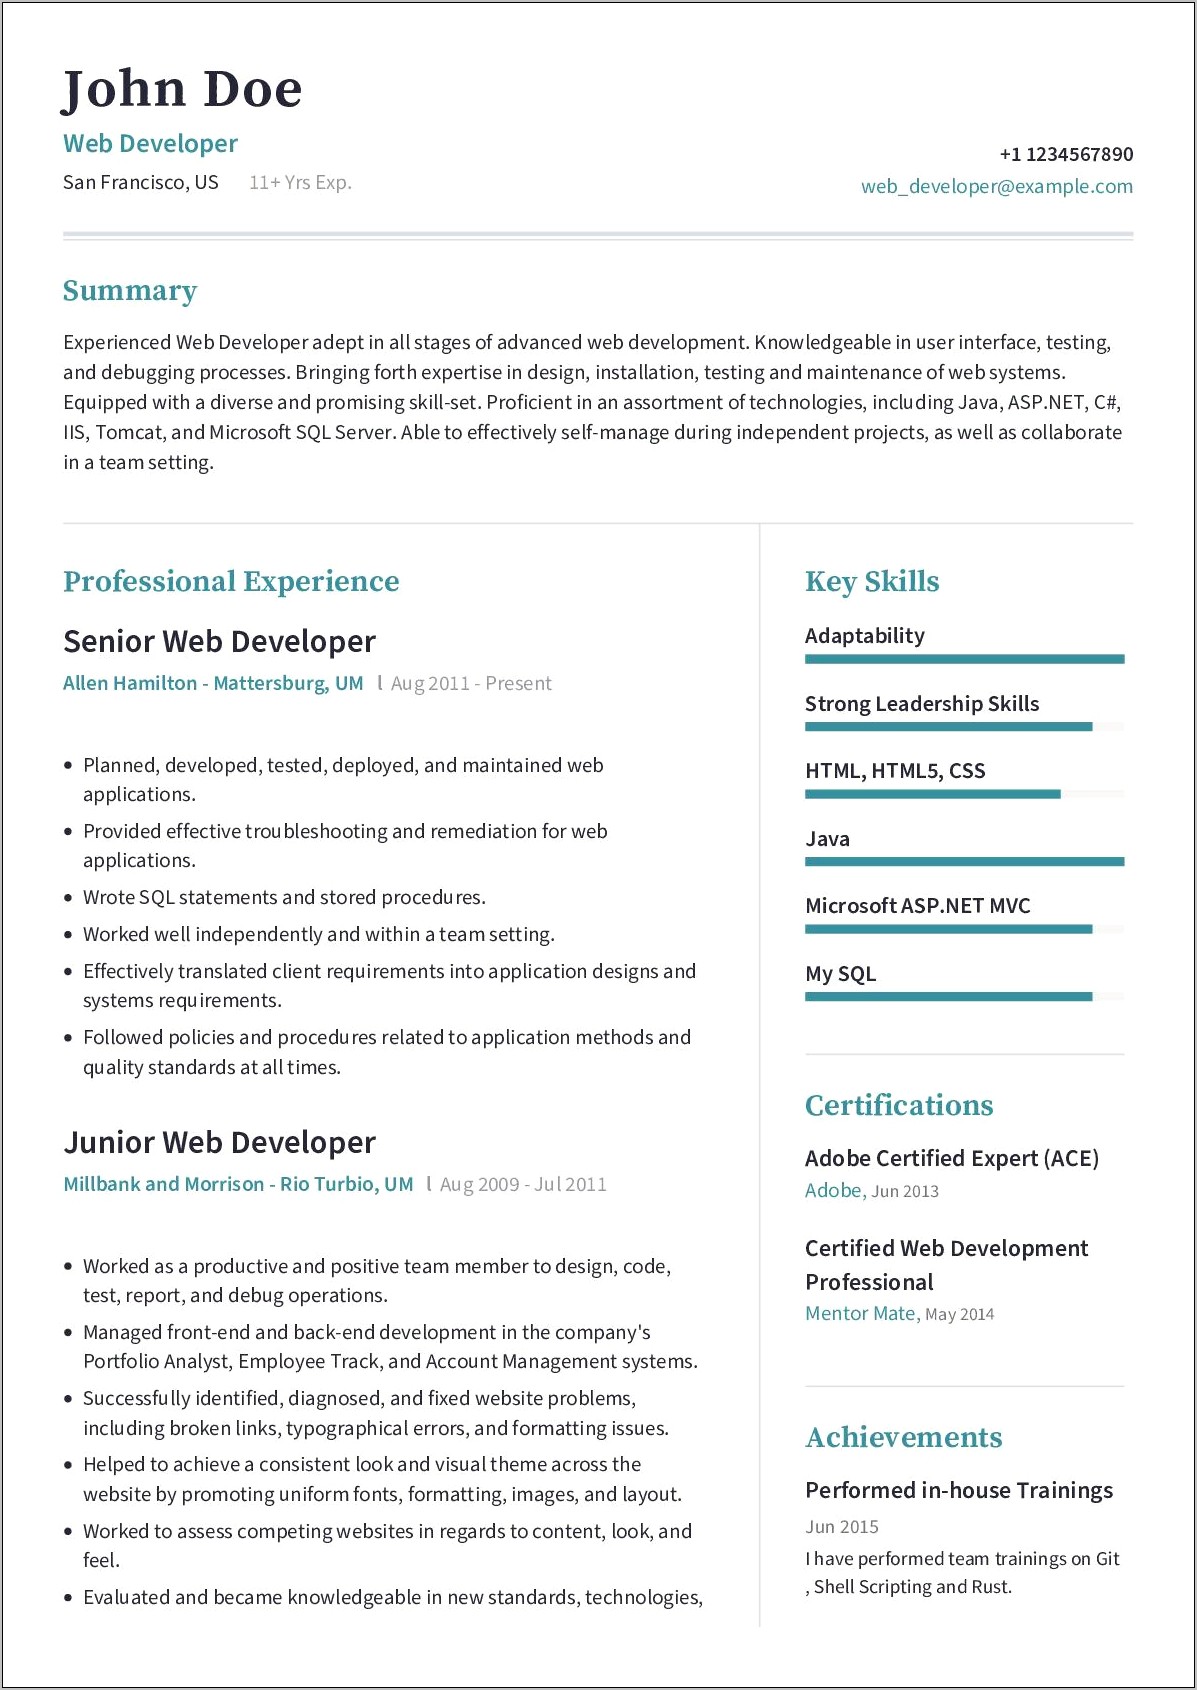 Skills To List On Resume For Web Developer